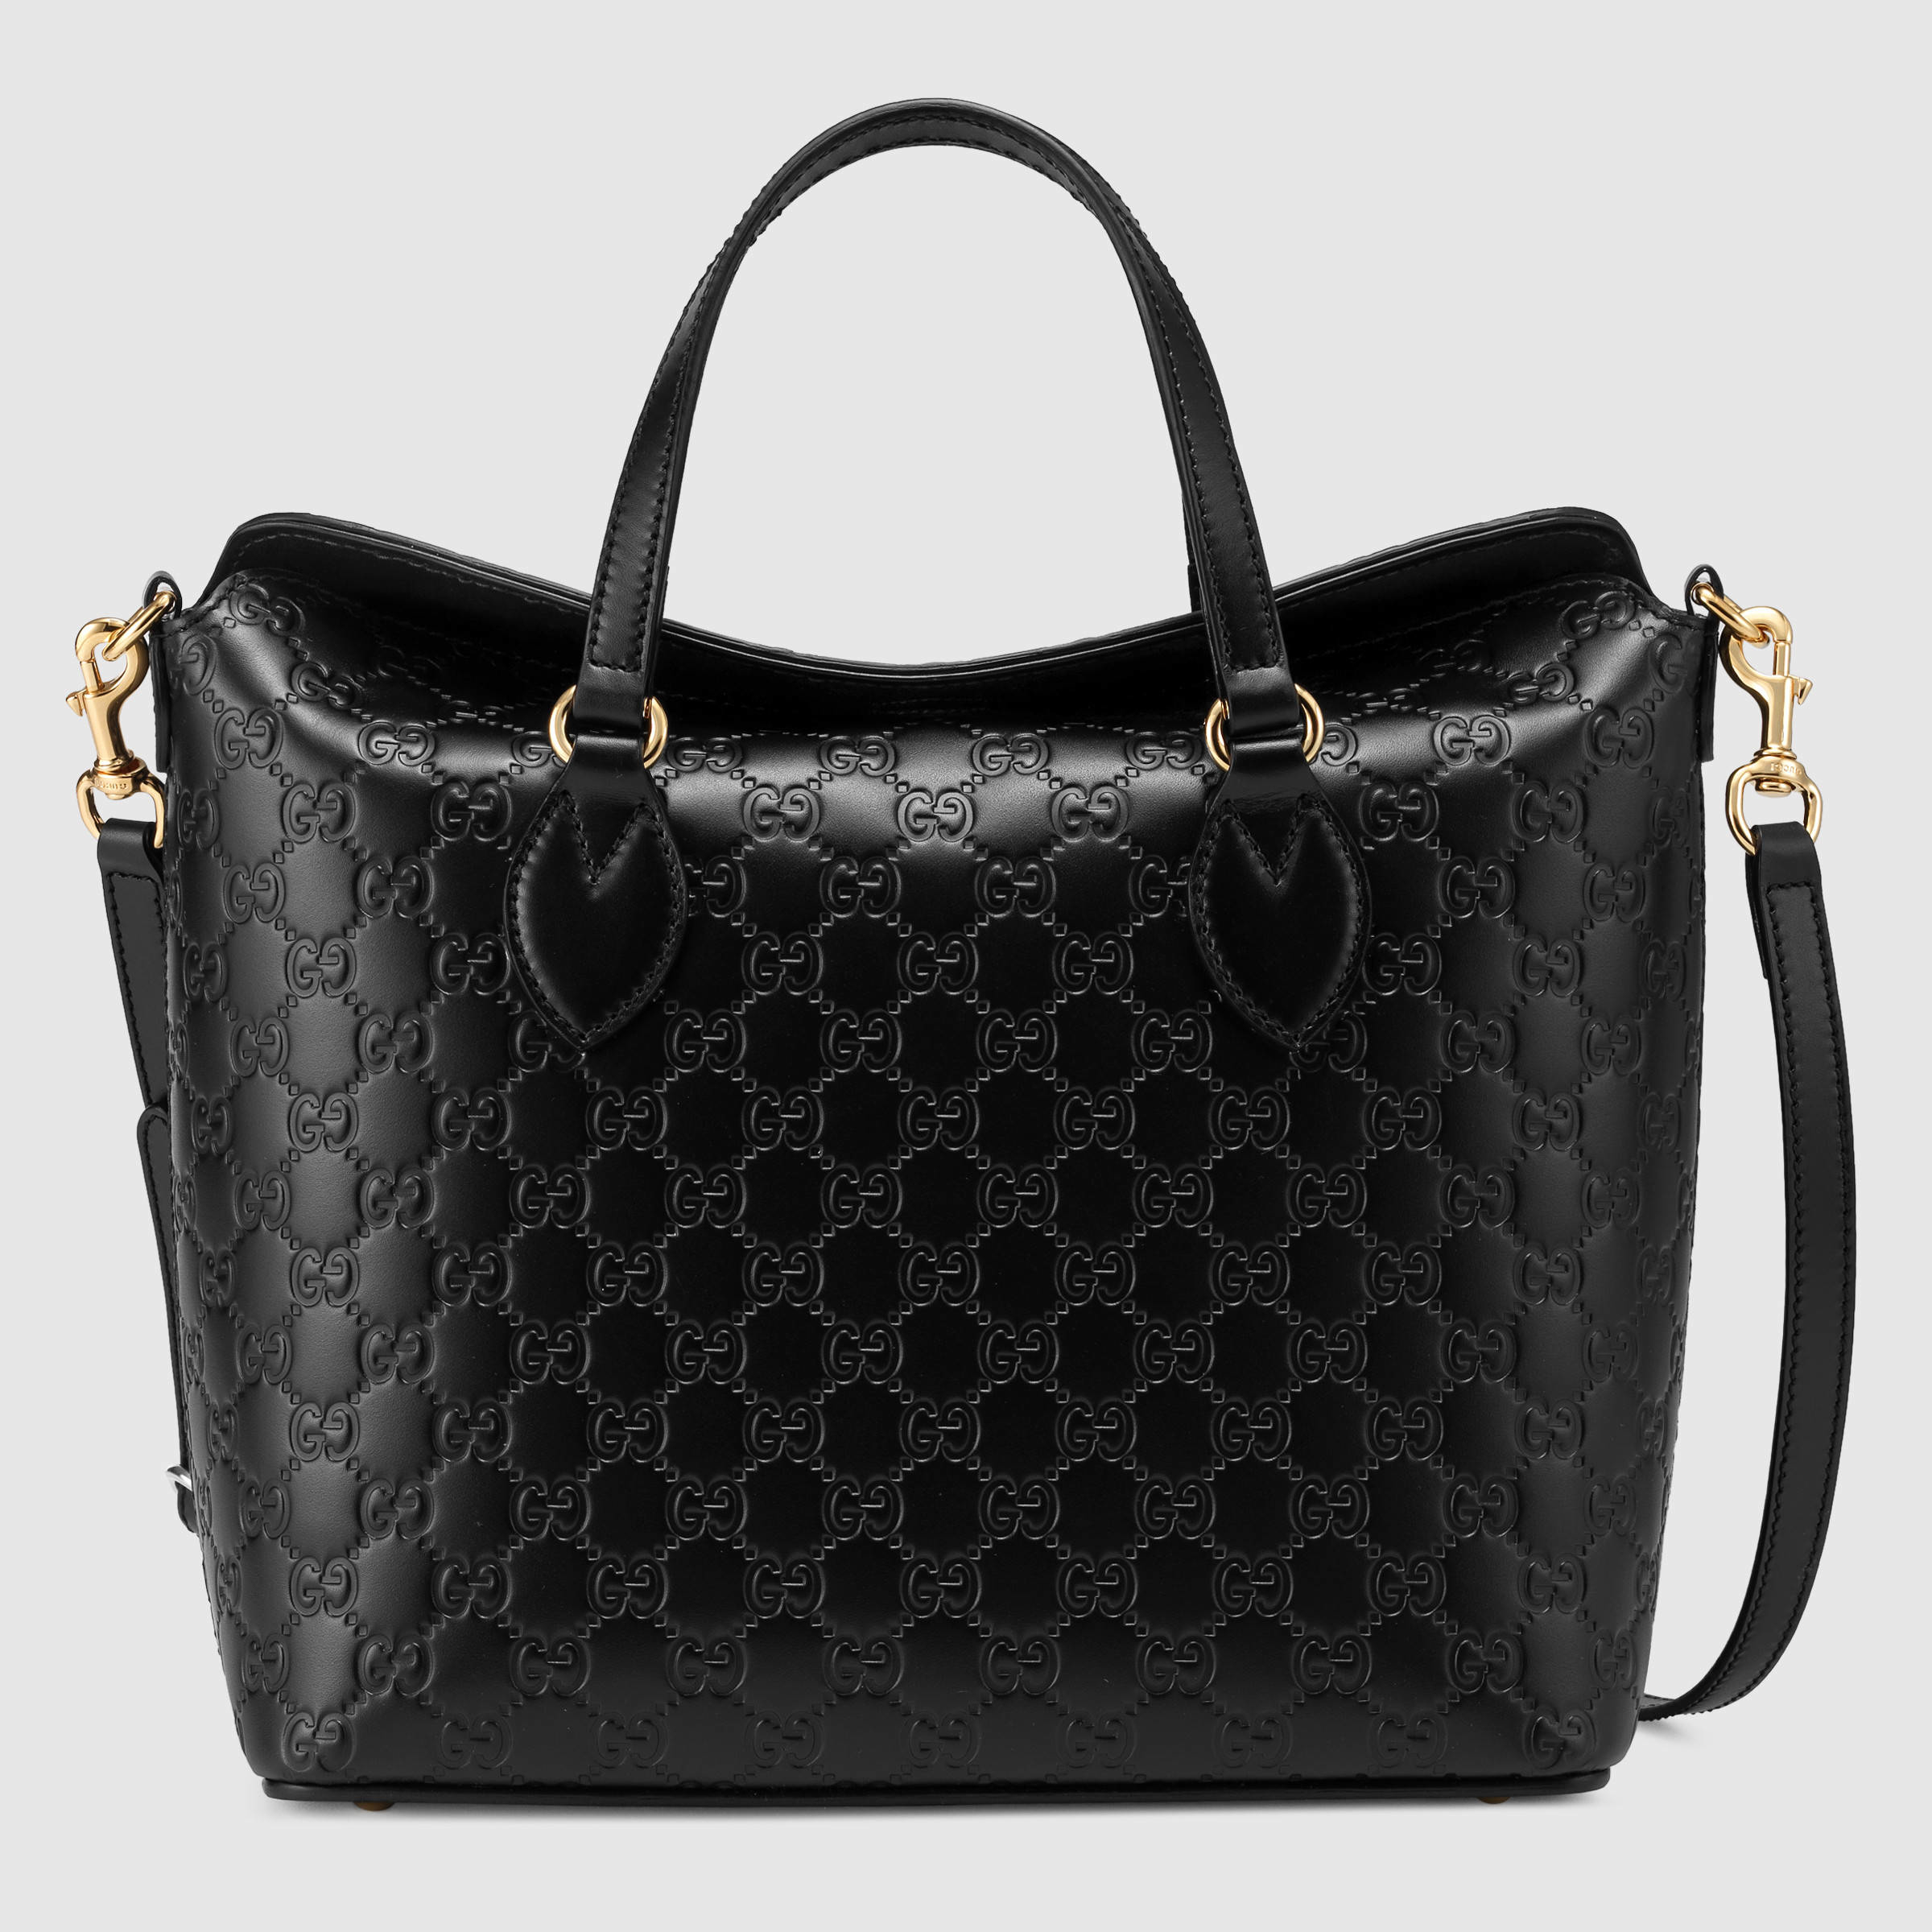 Gucci Signature Leather Shoulder Bag in Black | Lyst